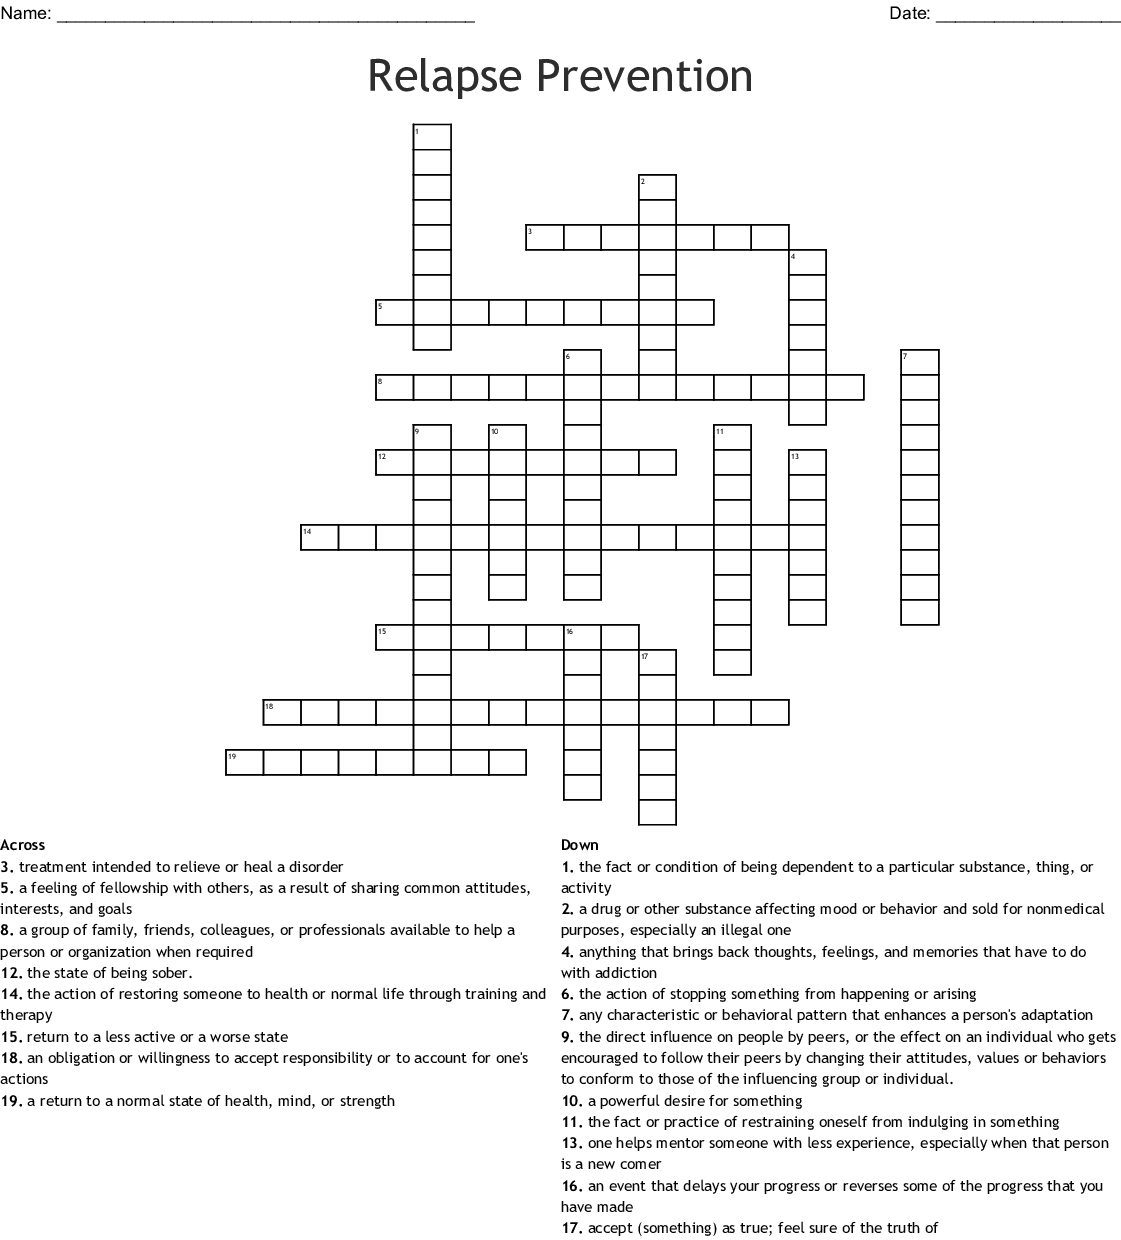 Relapse Prevention Crossword WordMint